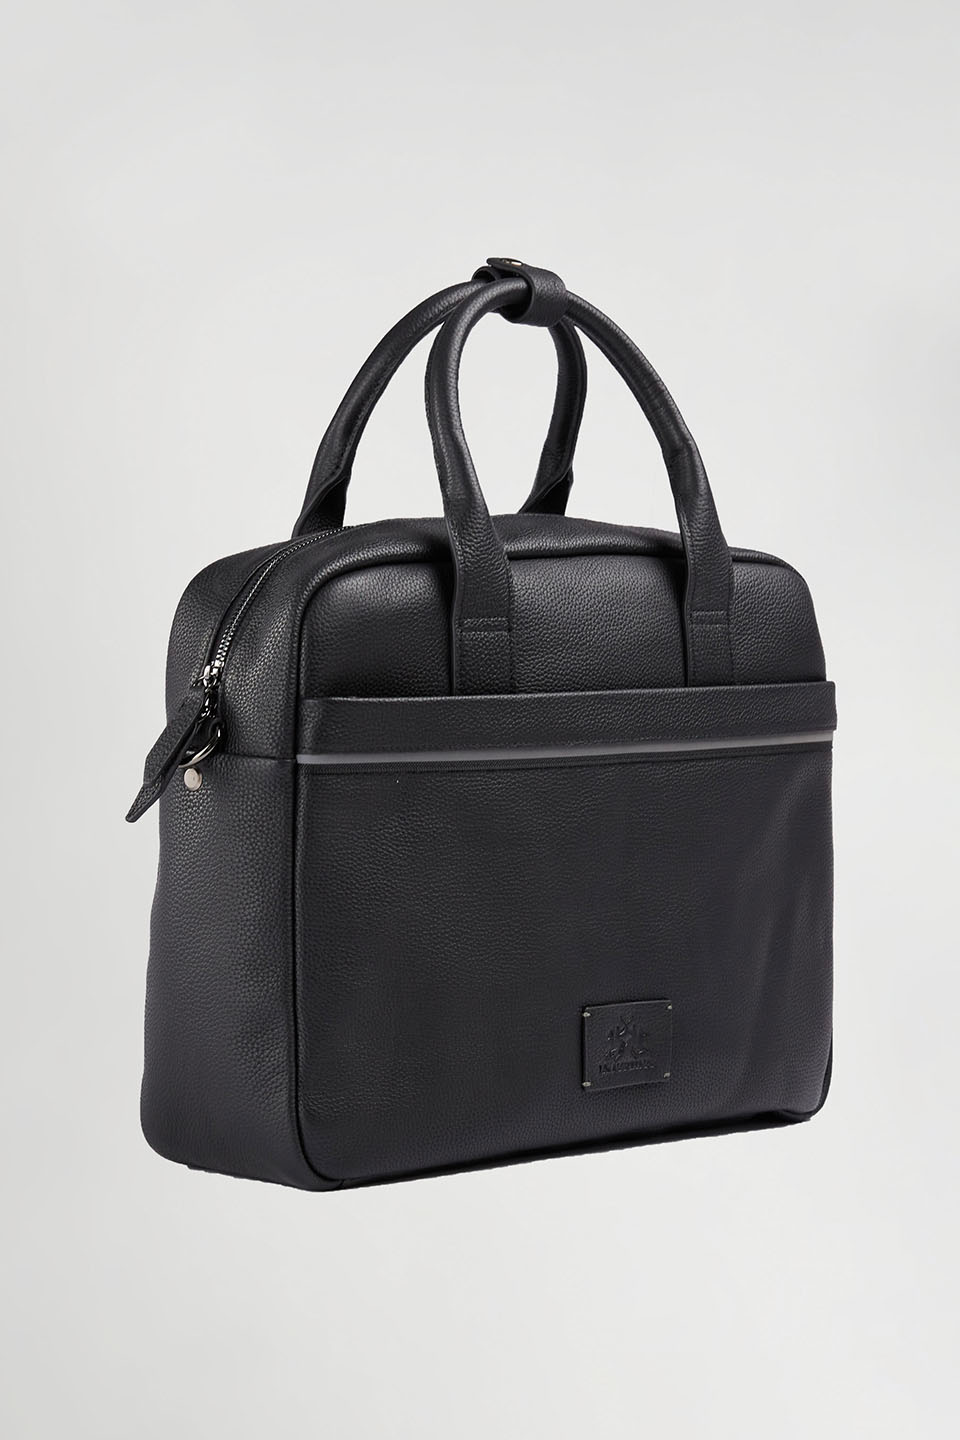 Official Giorgio Armani Men's Bags Online - Armani.com